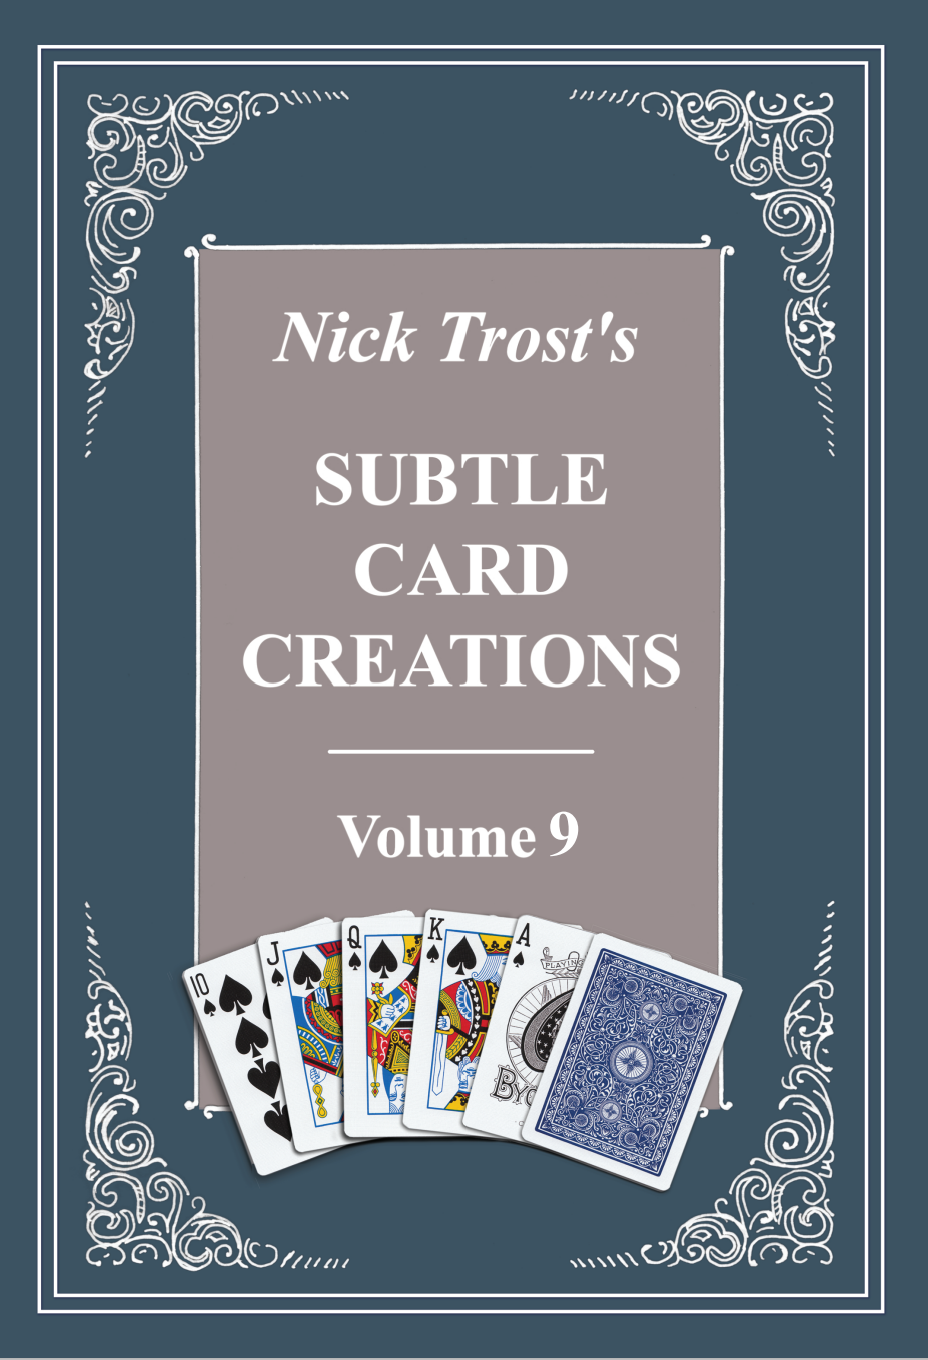 Nick Trost - Subtle Card Creation Vol. 9